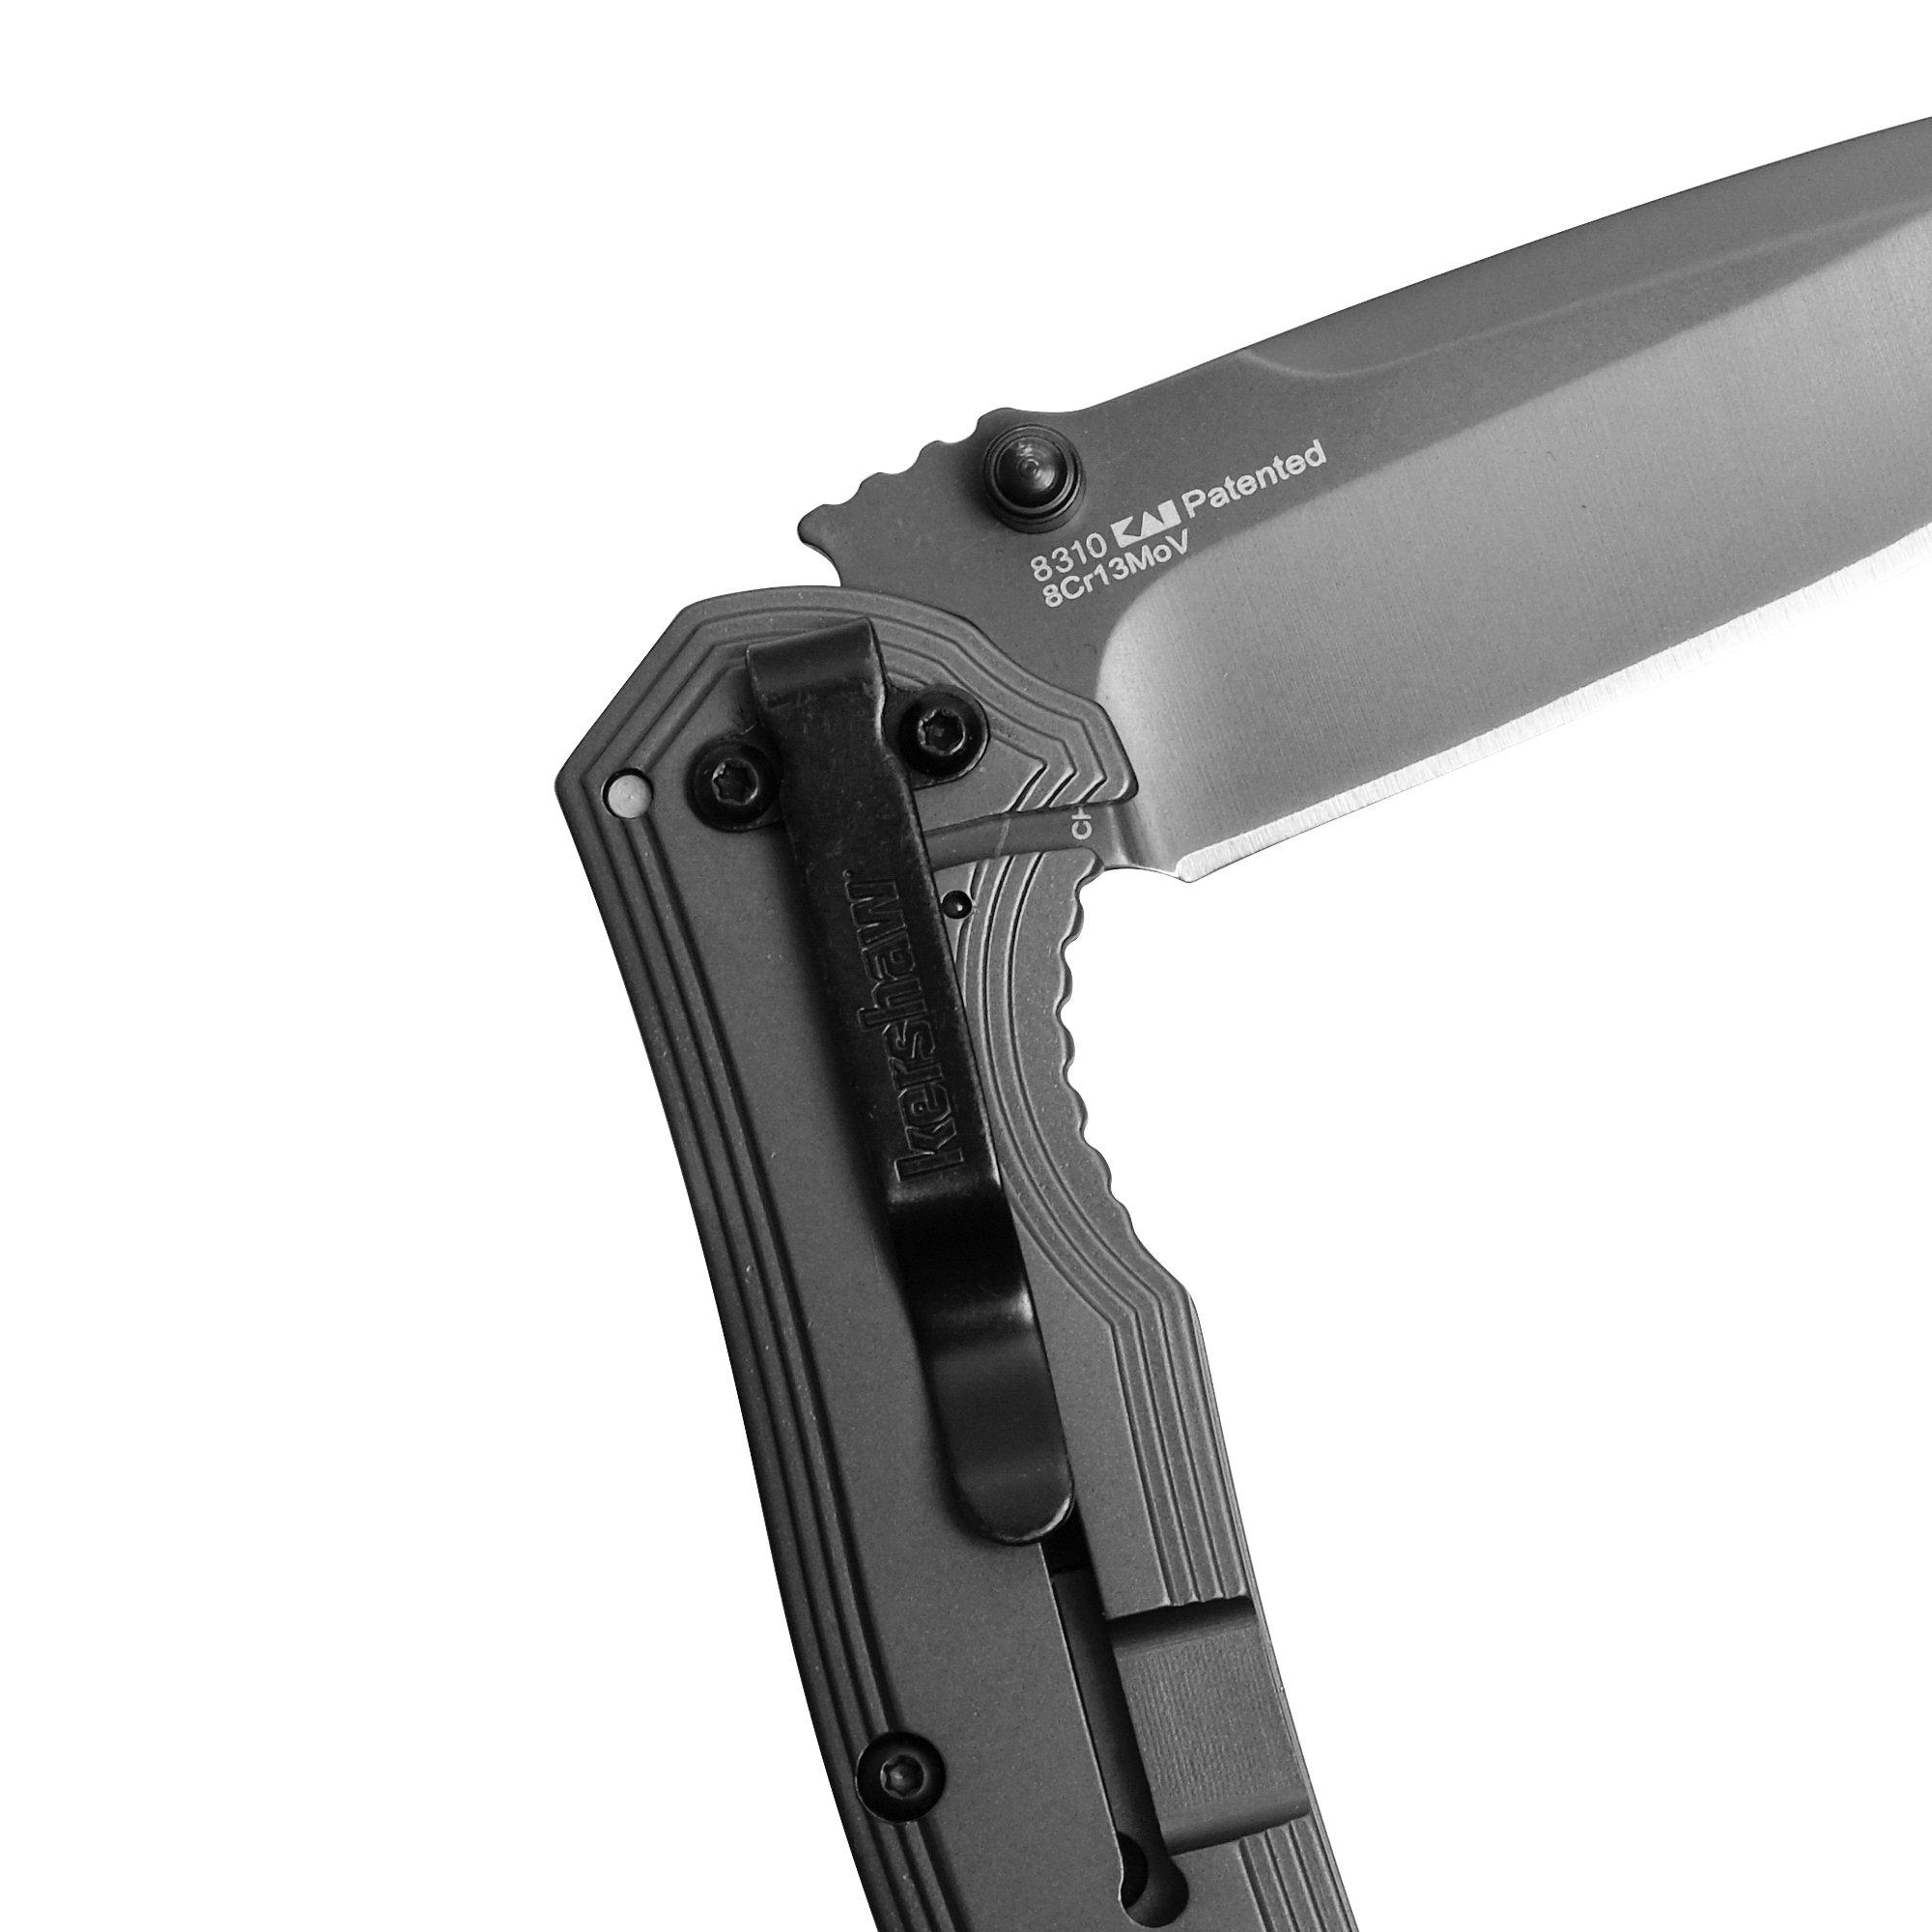 Kershaw Fringe Pocket Knife, 3-inch 8Cr13MoV Steel Blade with Gray Titanium Carbo-Nitride Coating, Carbon-Fiber Insert; SpeedSafe Assisted Opening, 8310